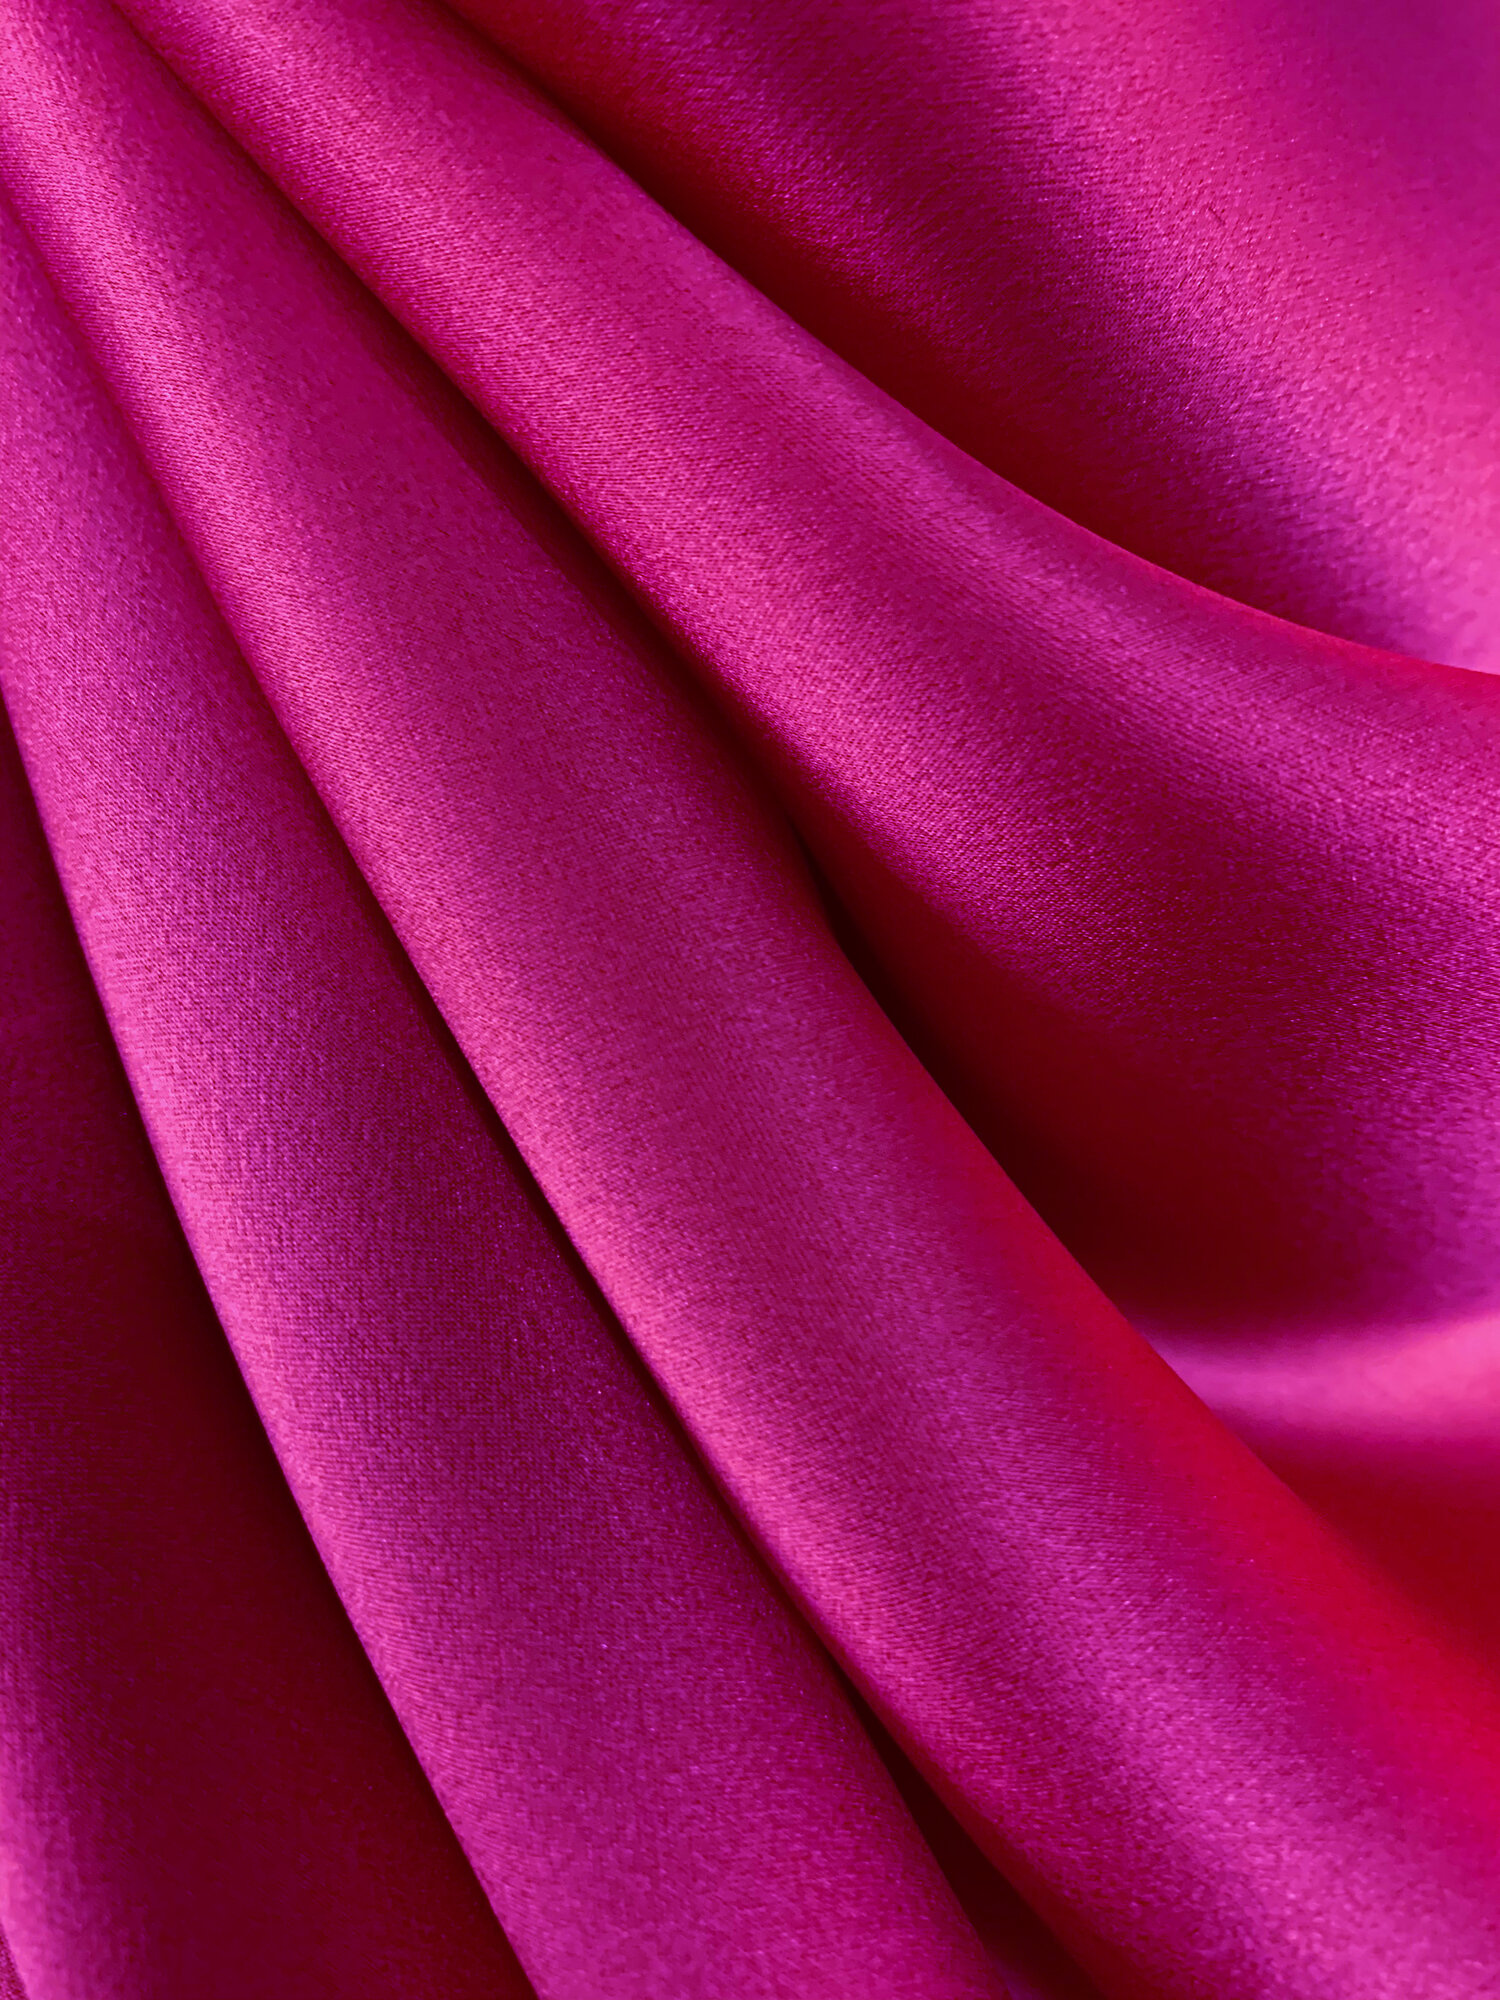 PURE MULBERRY SILK Fabric by the Yard Luxury Silk Hot Pink Natural Silk  Handmade in Vietnam 